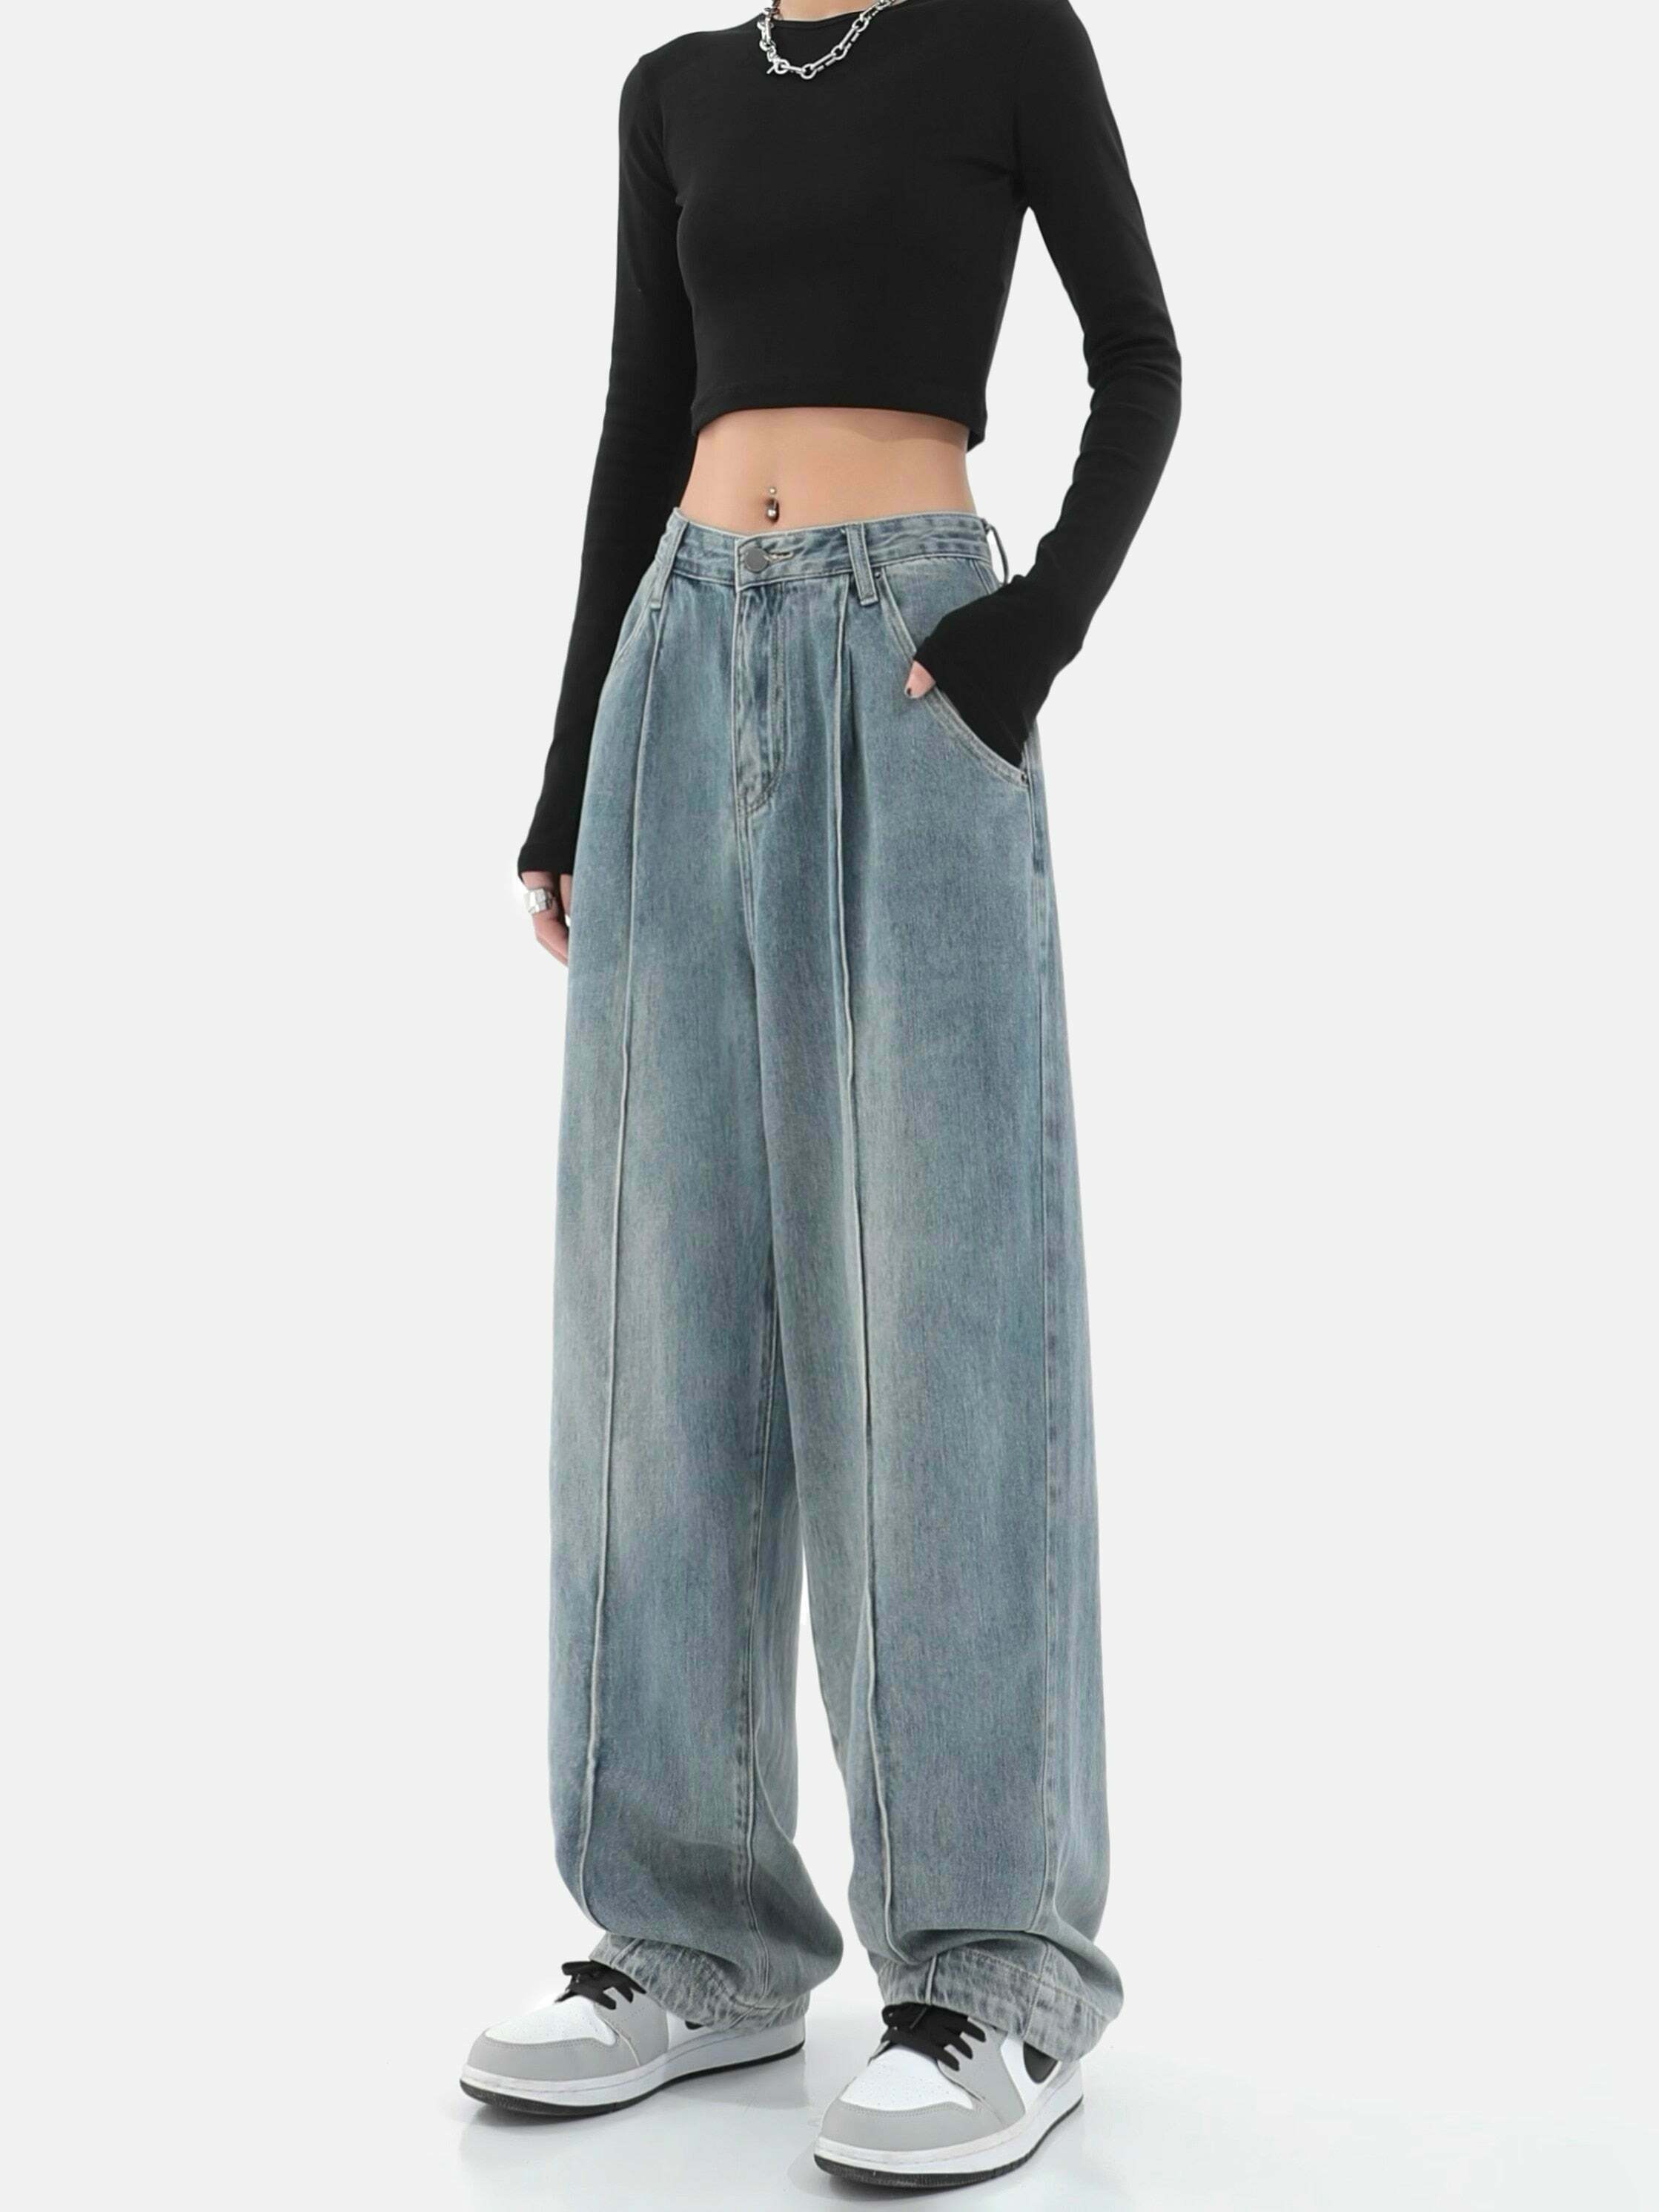 wideleg baggy denim pants urban chic & youthful style 4828